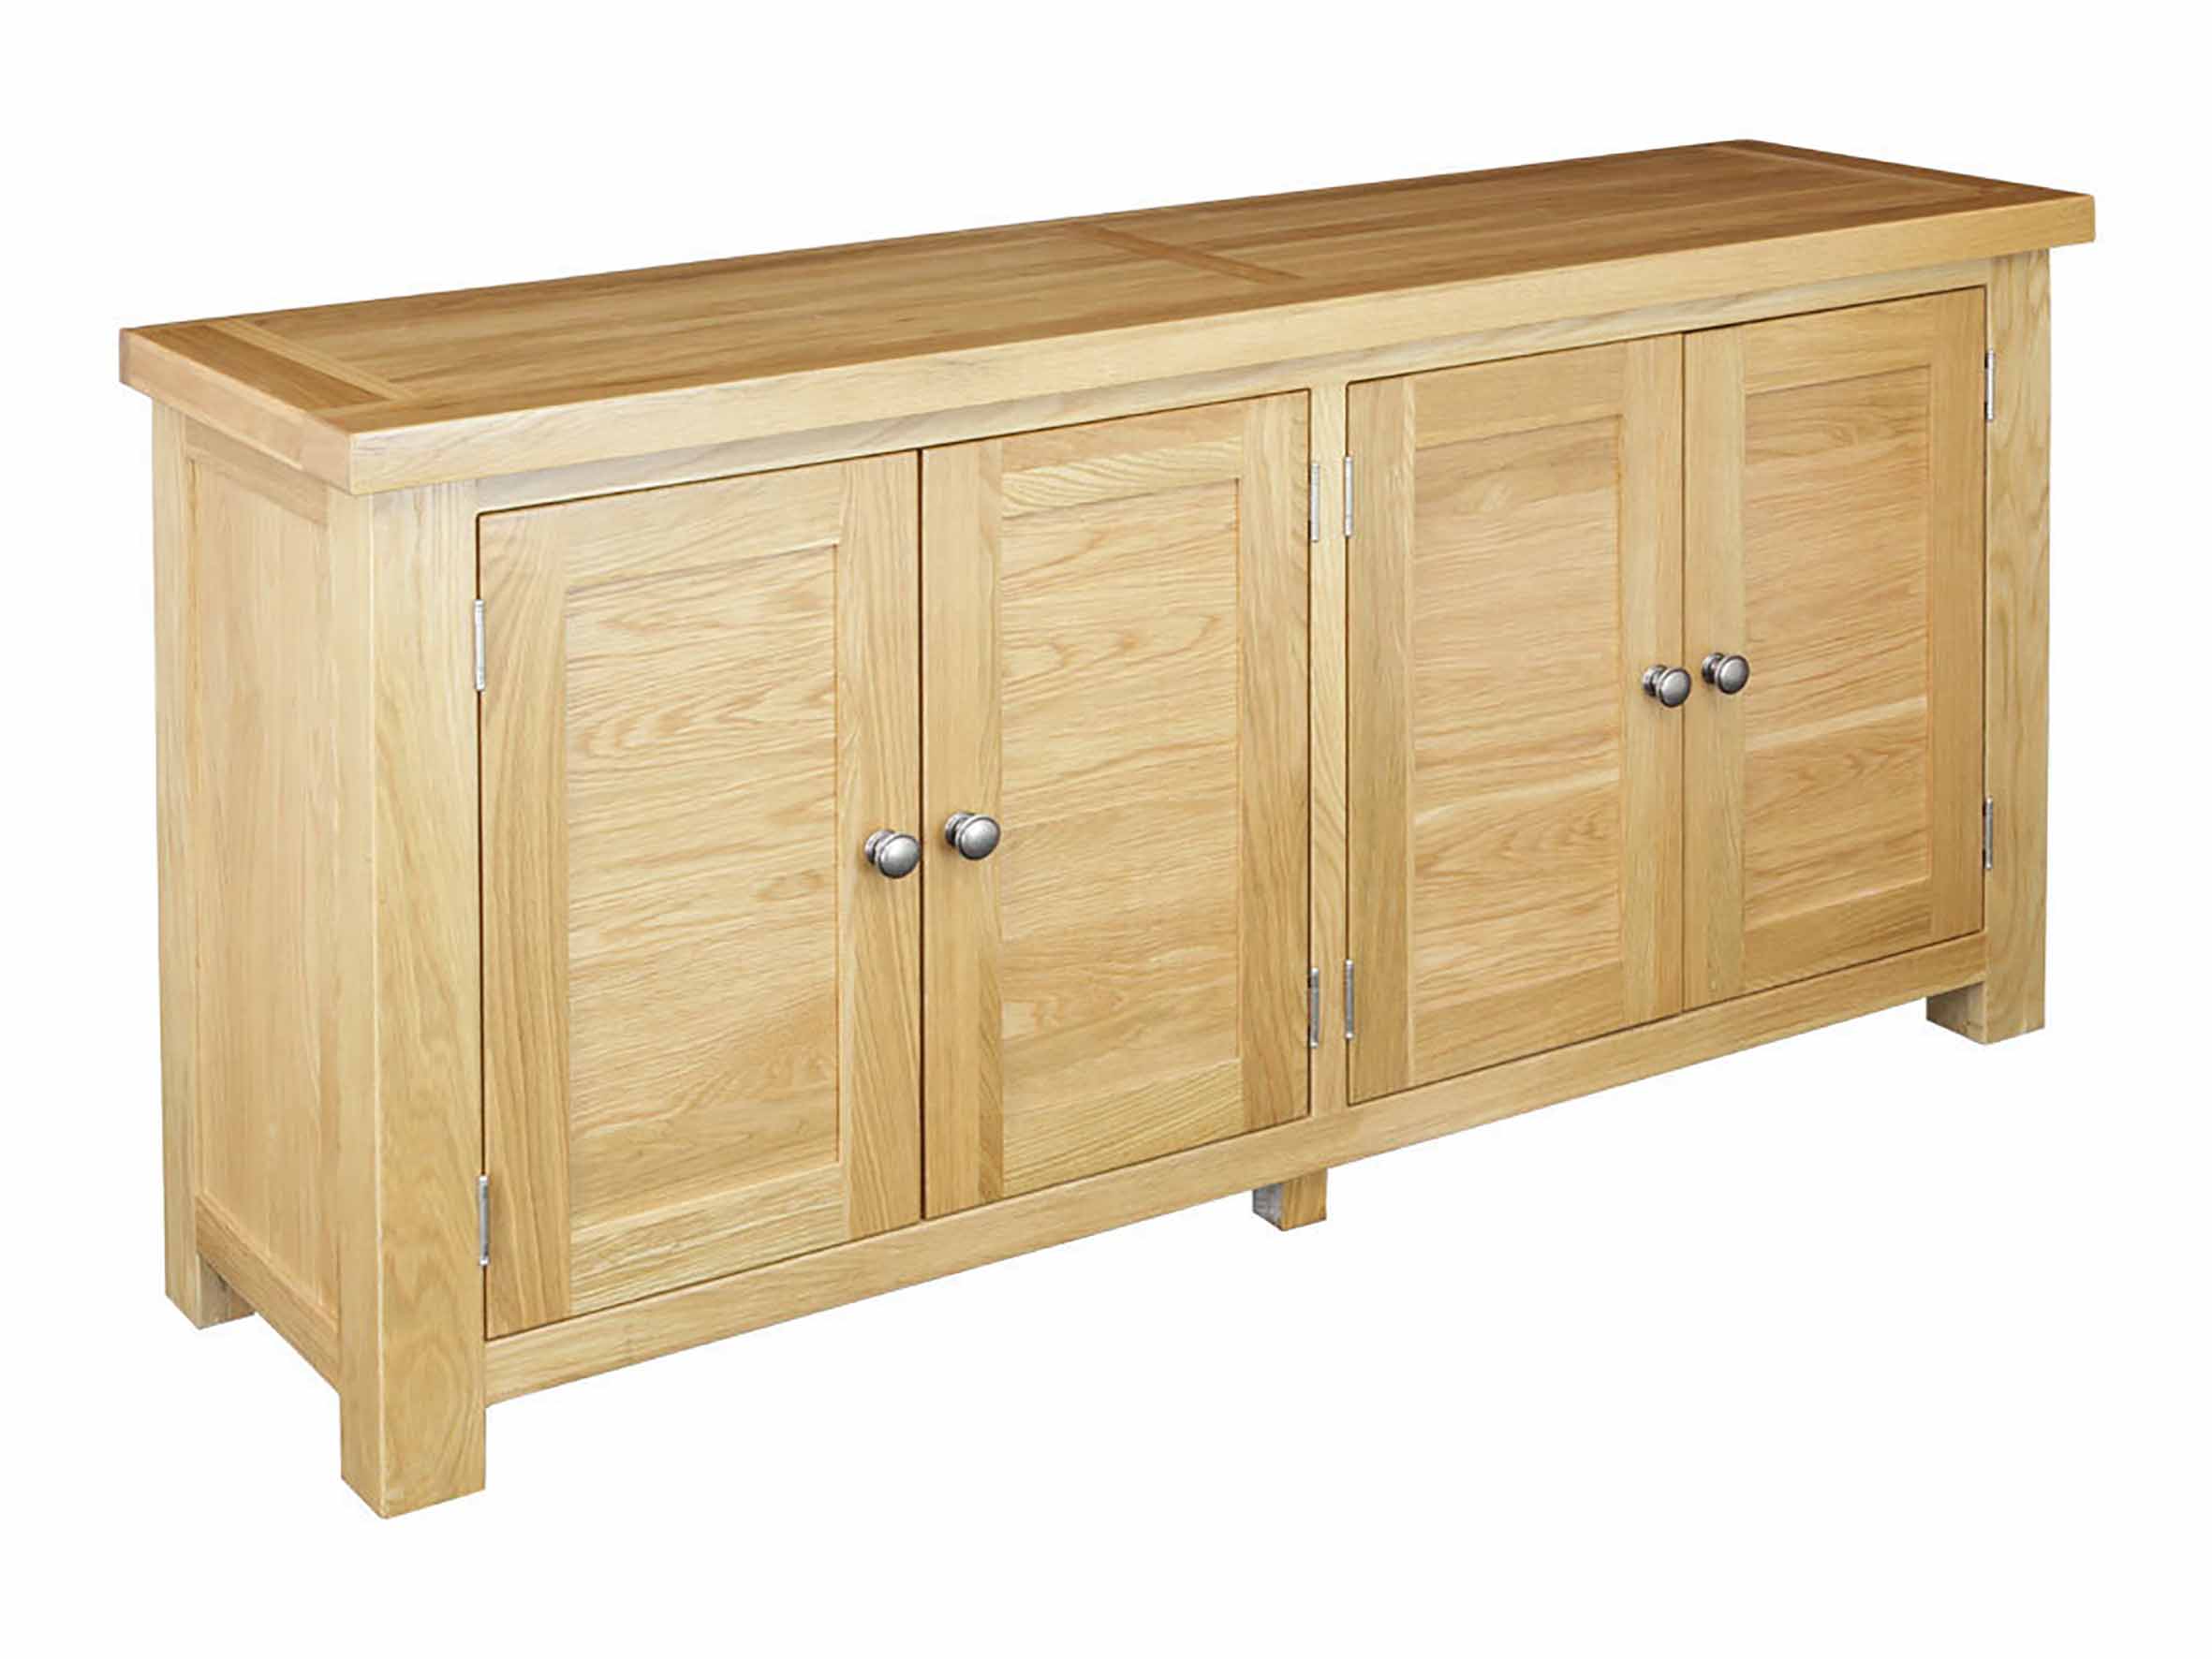 Eton Solid Oak Sideboard from Top Secret Furniture